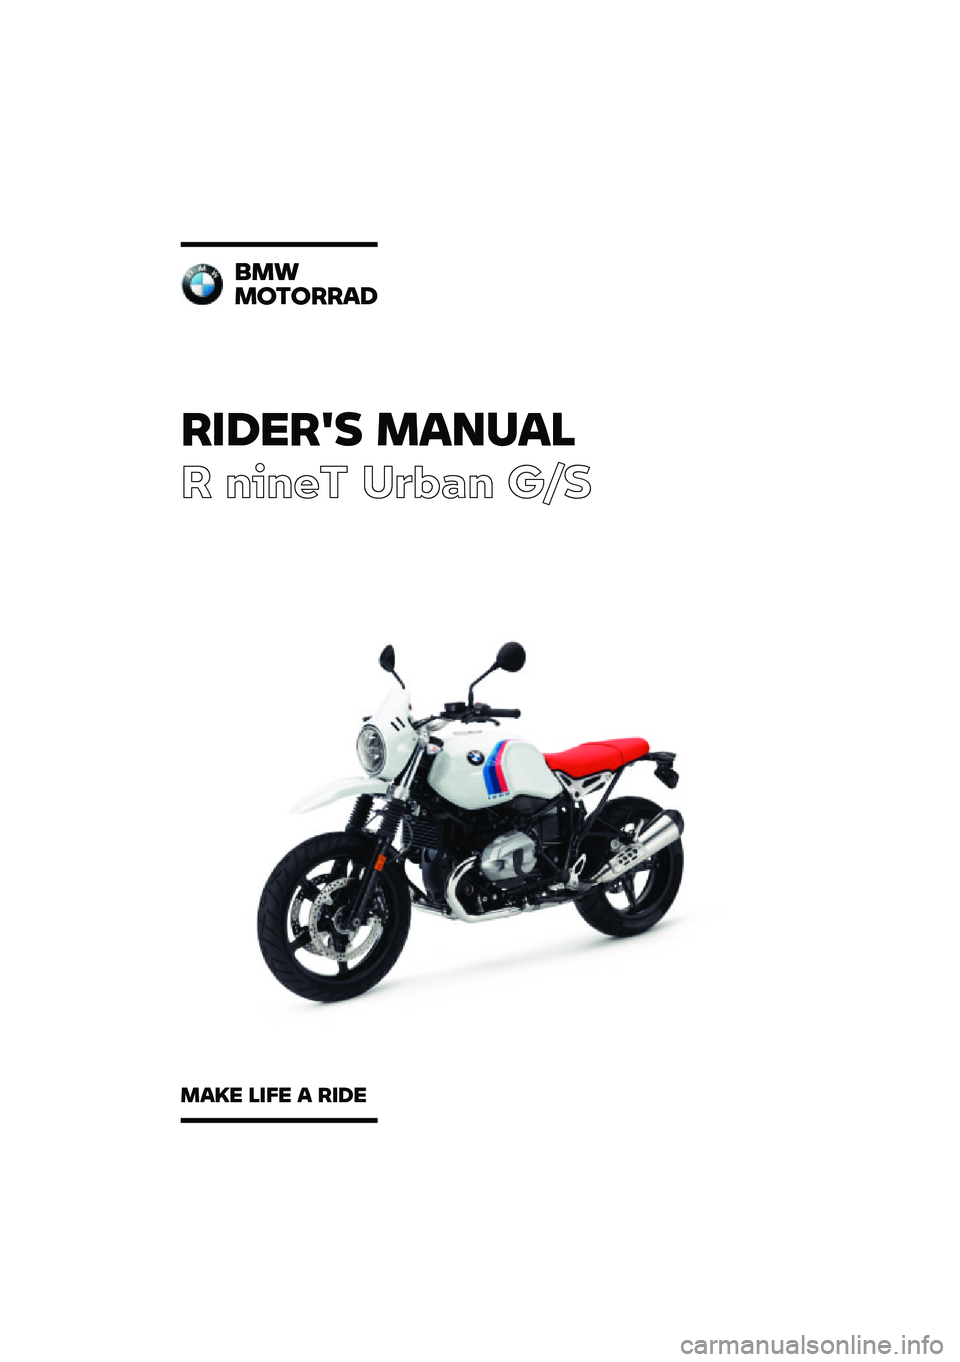 BMW MOTORRAD R NINE T URVAN G/S 2020  Riders Manual (in English) ������� �\b�	�
��	�\f
� ����� ��\b�	�
� ��\f�
�
�\b�
�\b������	�
�\b�	�� �\f��� �	 ���� 